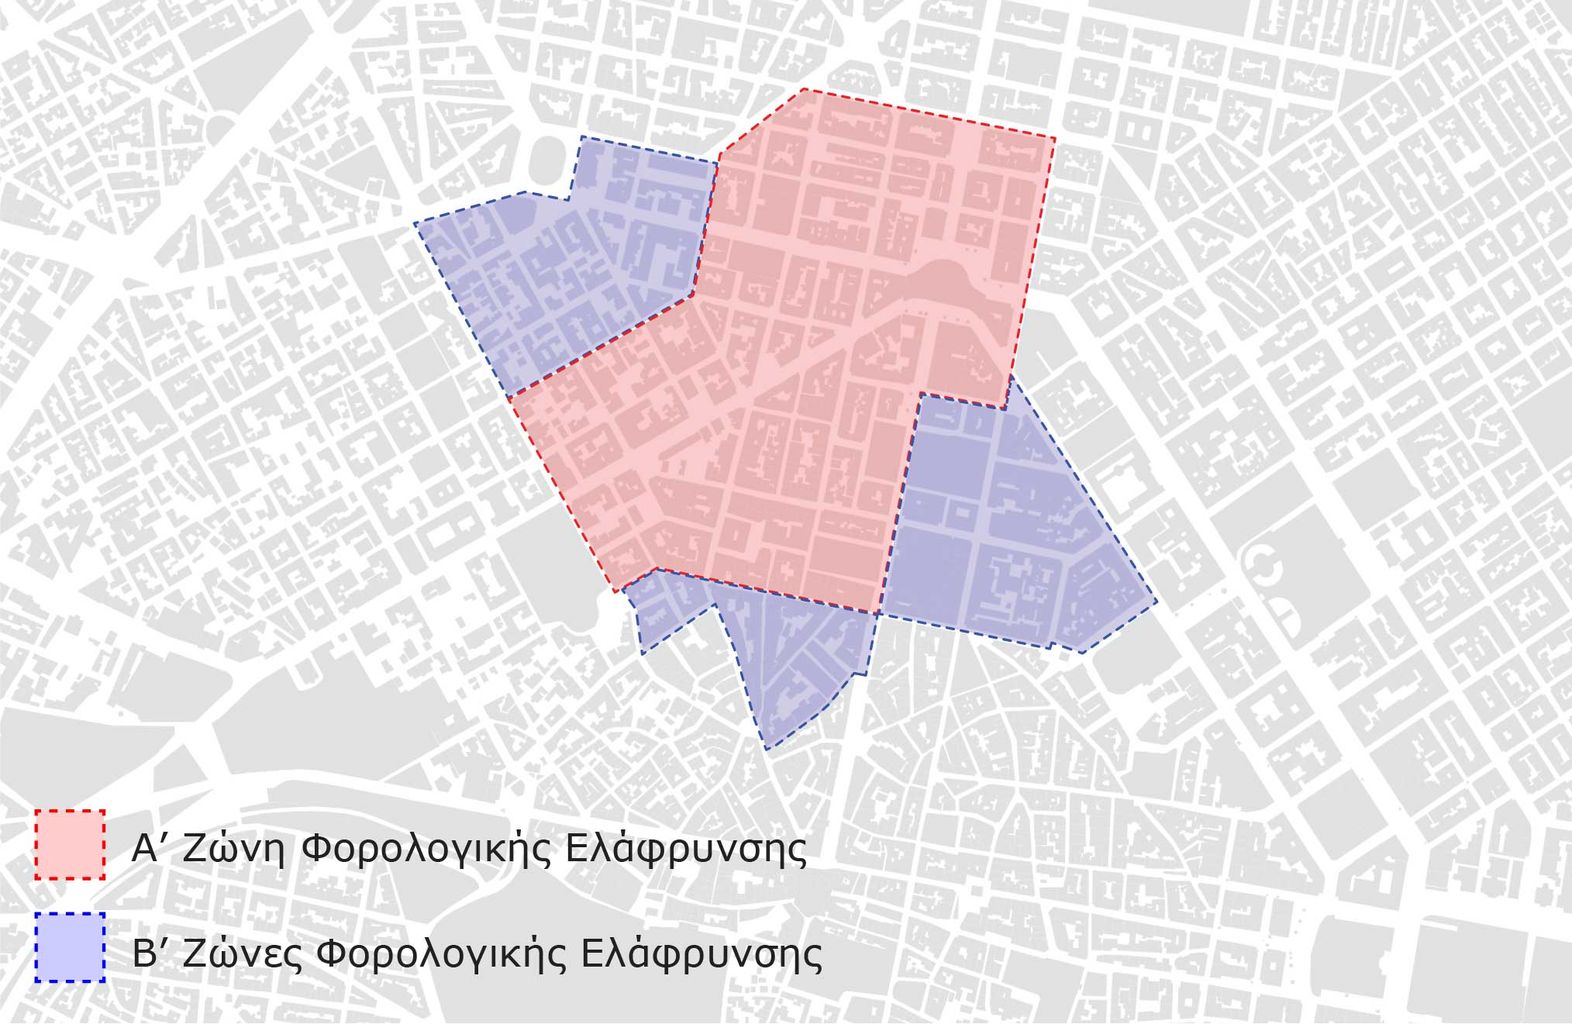 Regeneration of Athens City Center